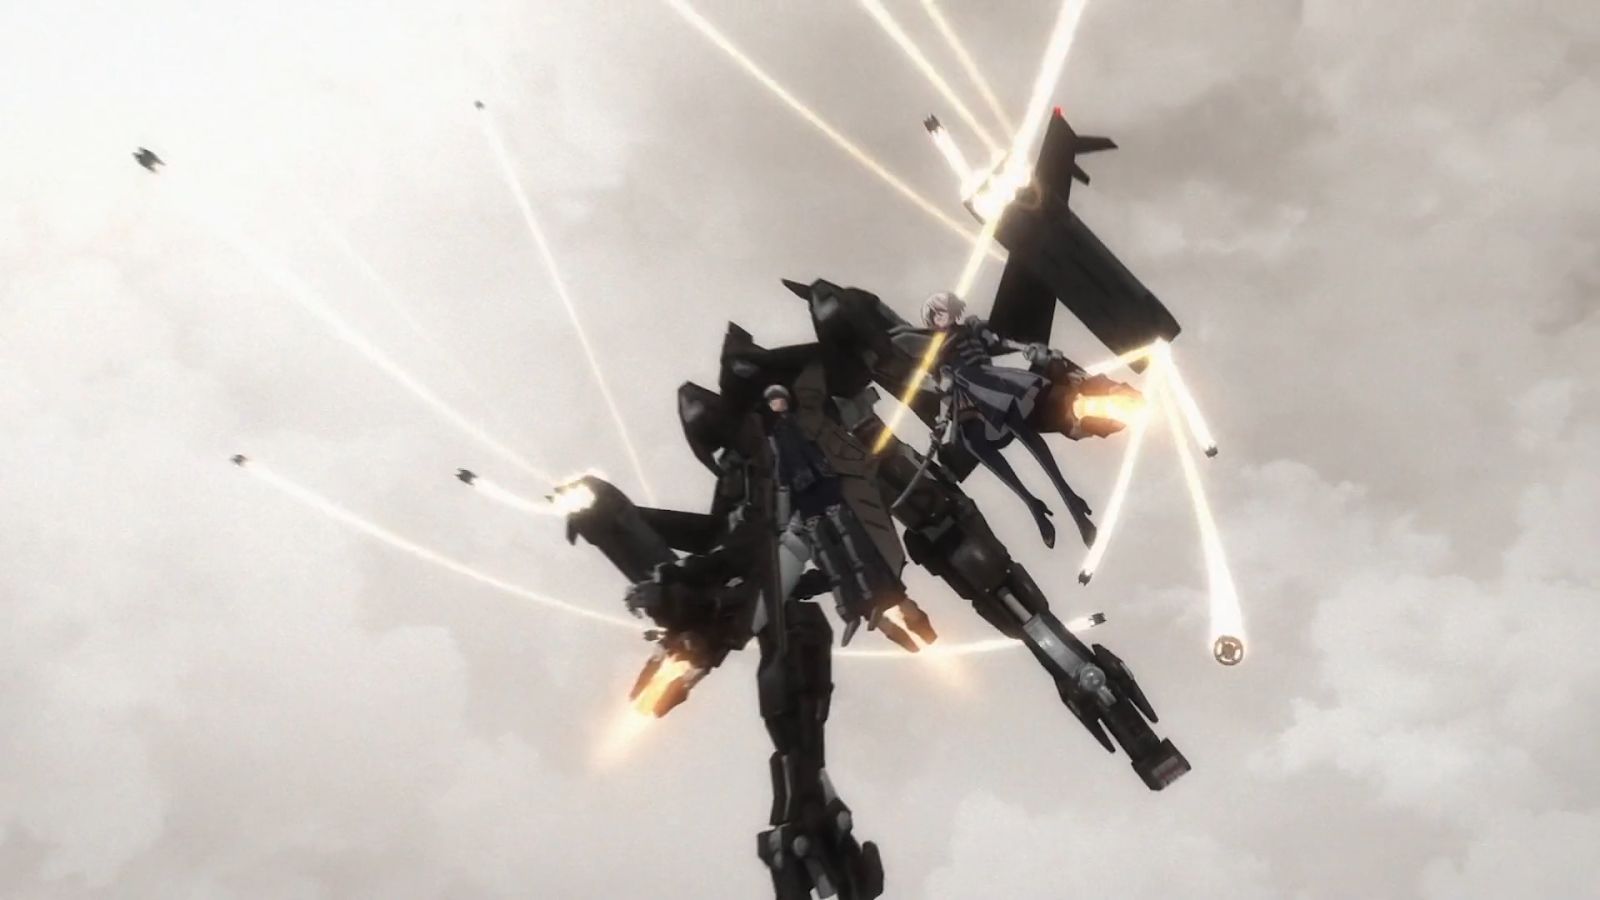 NieR Automata flight unit in the anime